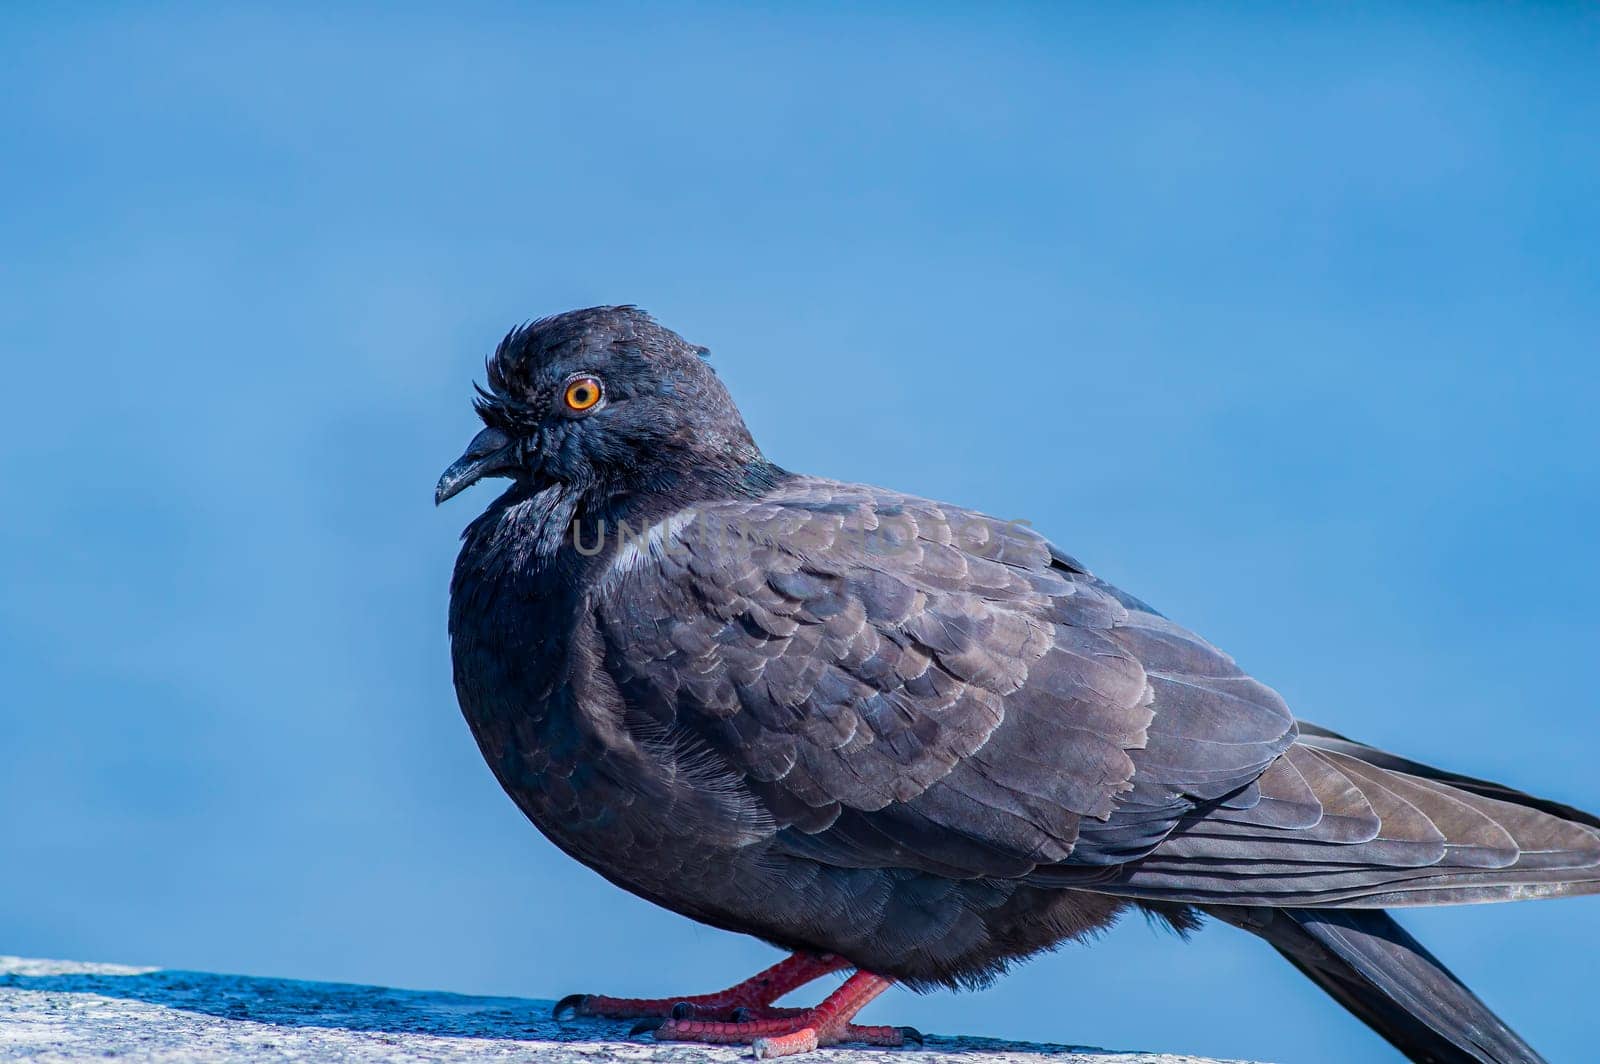 Black pigeon of the columbidae bird family. Animals in the wild. Columba birds. Beauty in nature. Background image.